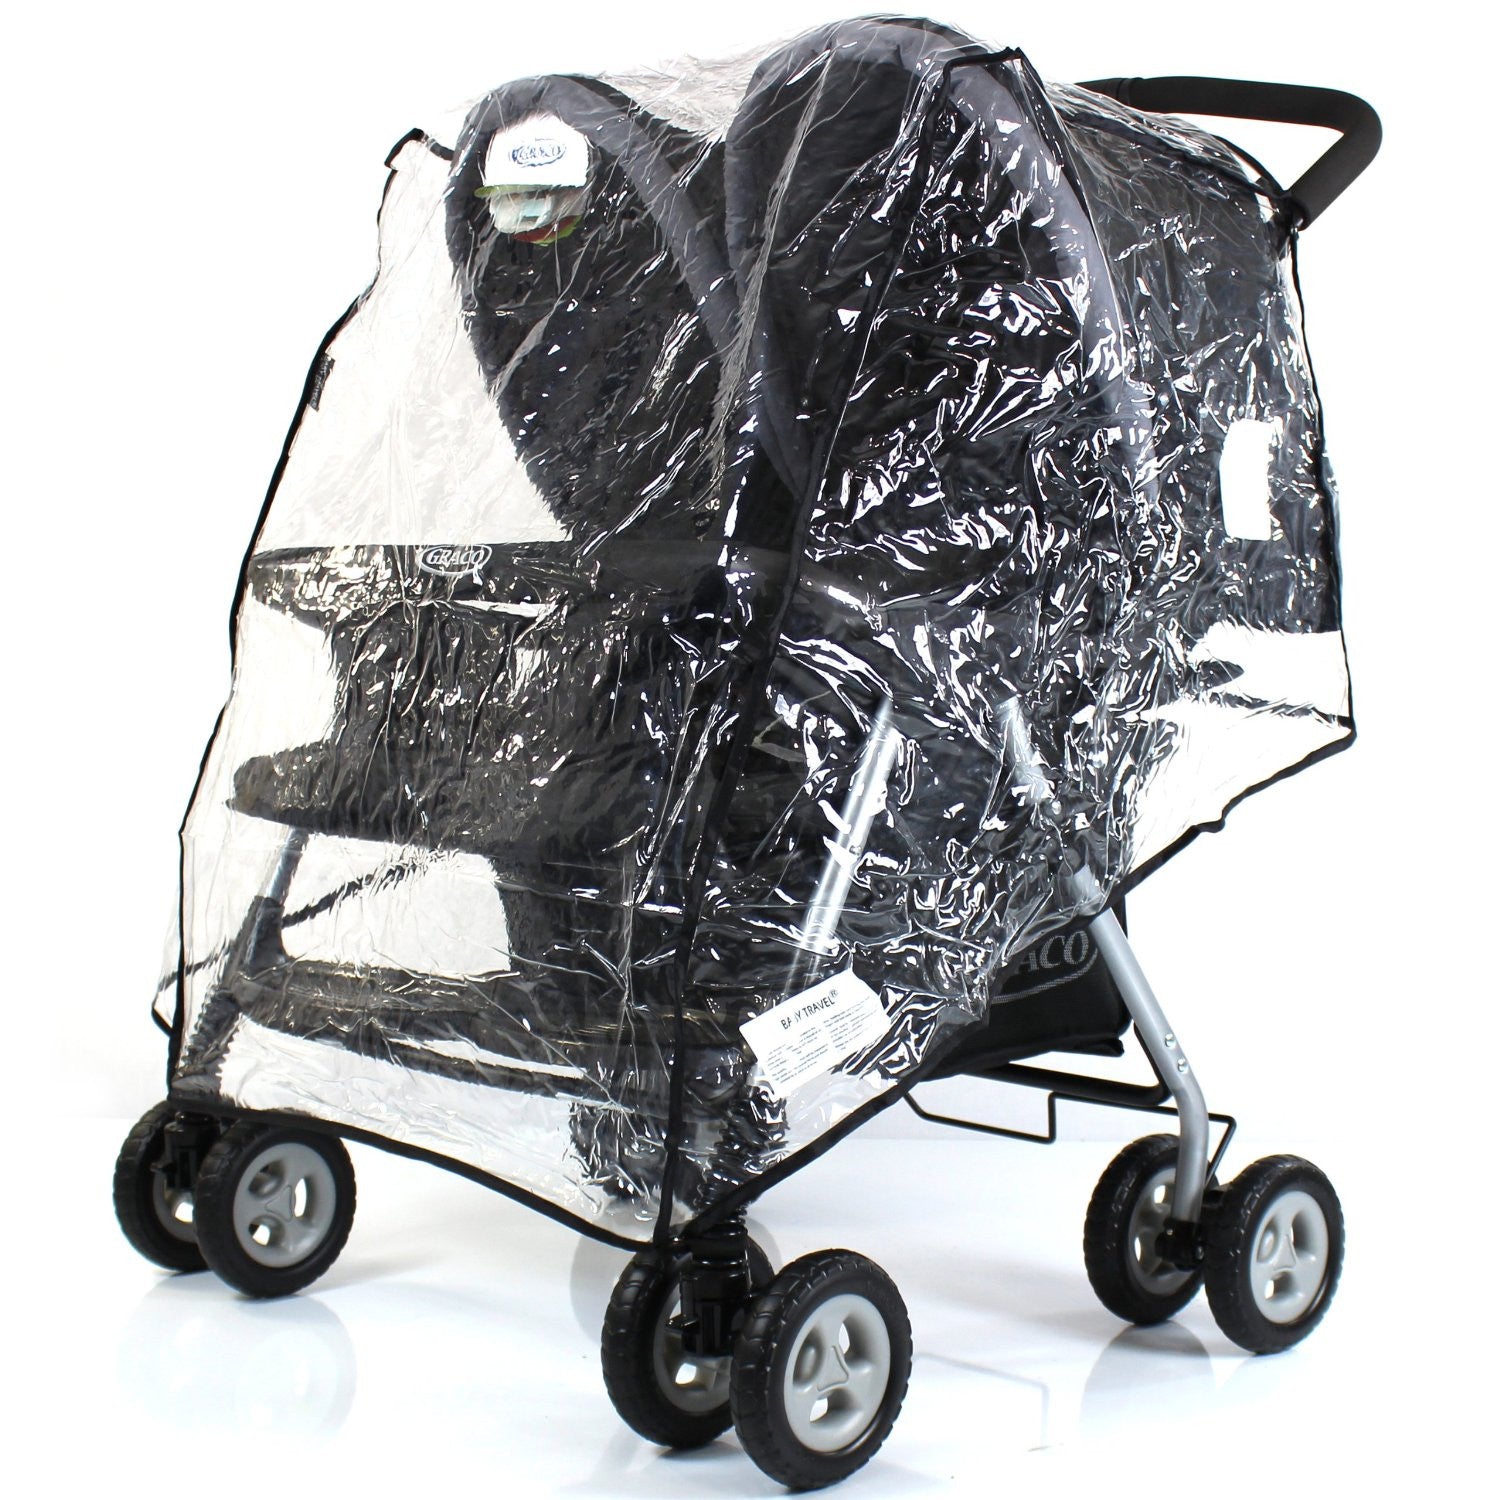 maclaren double stroller rain cover